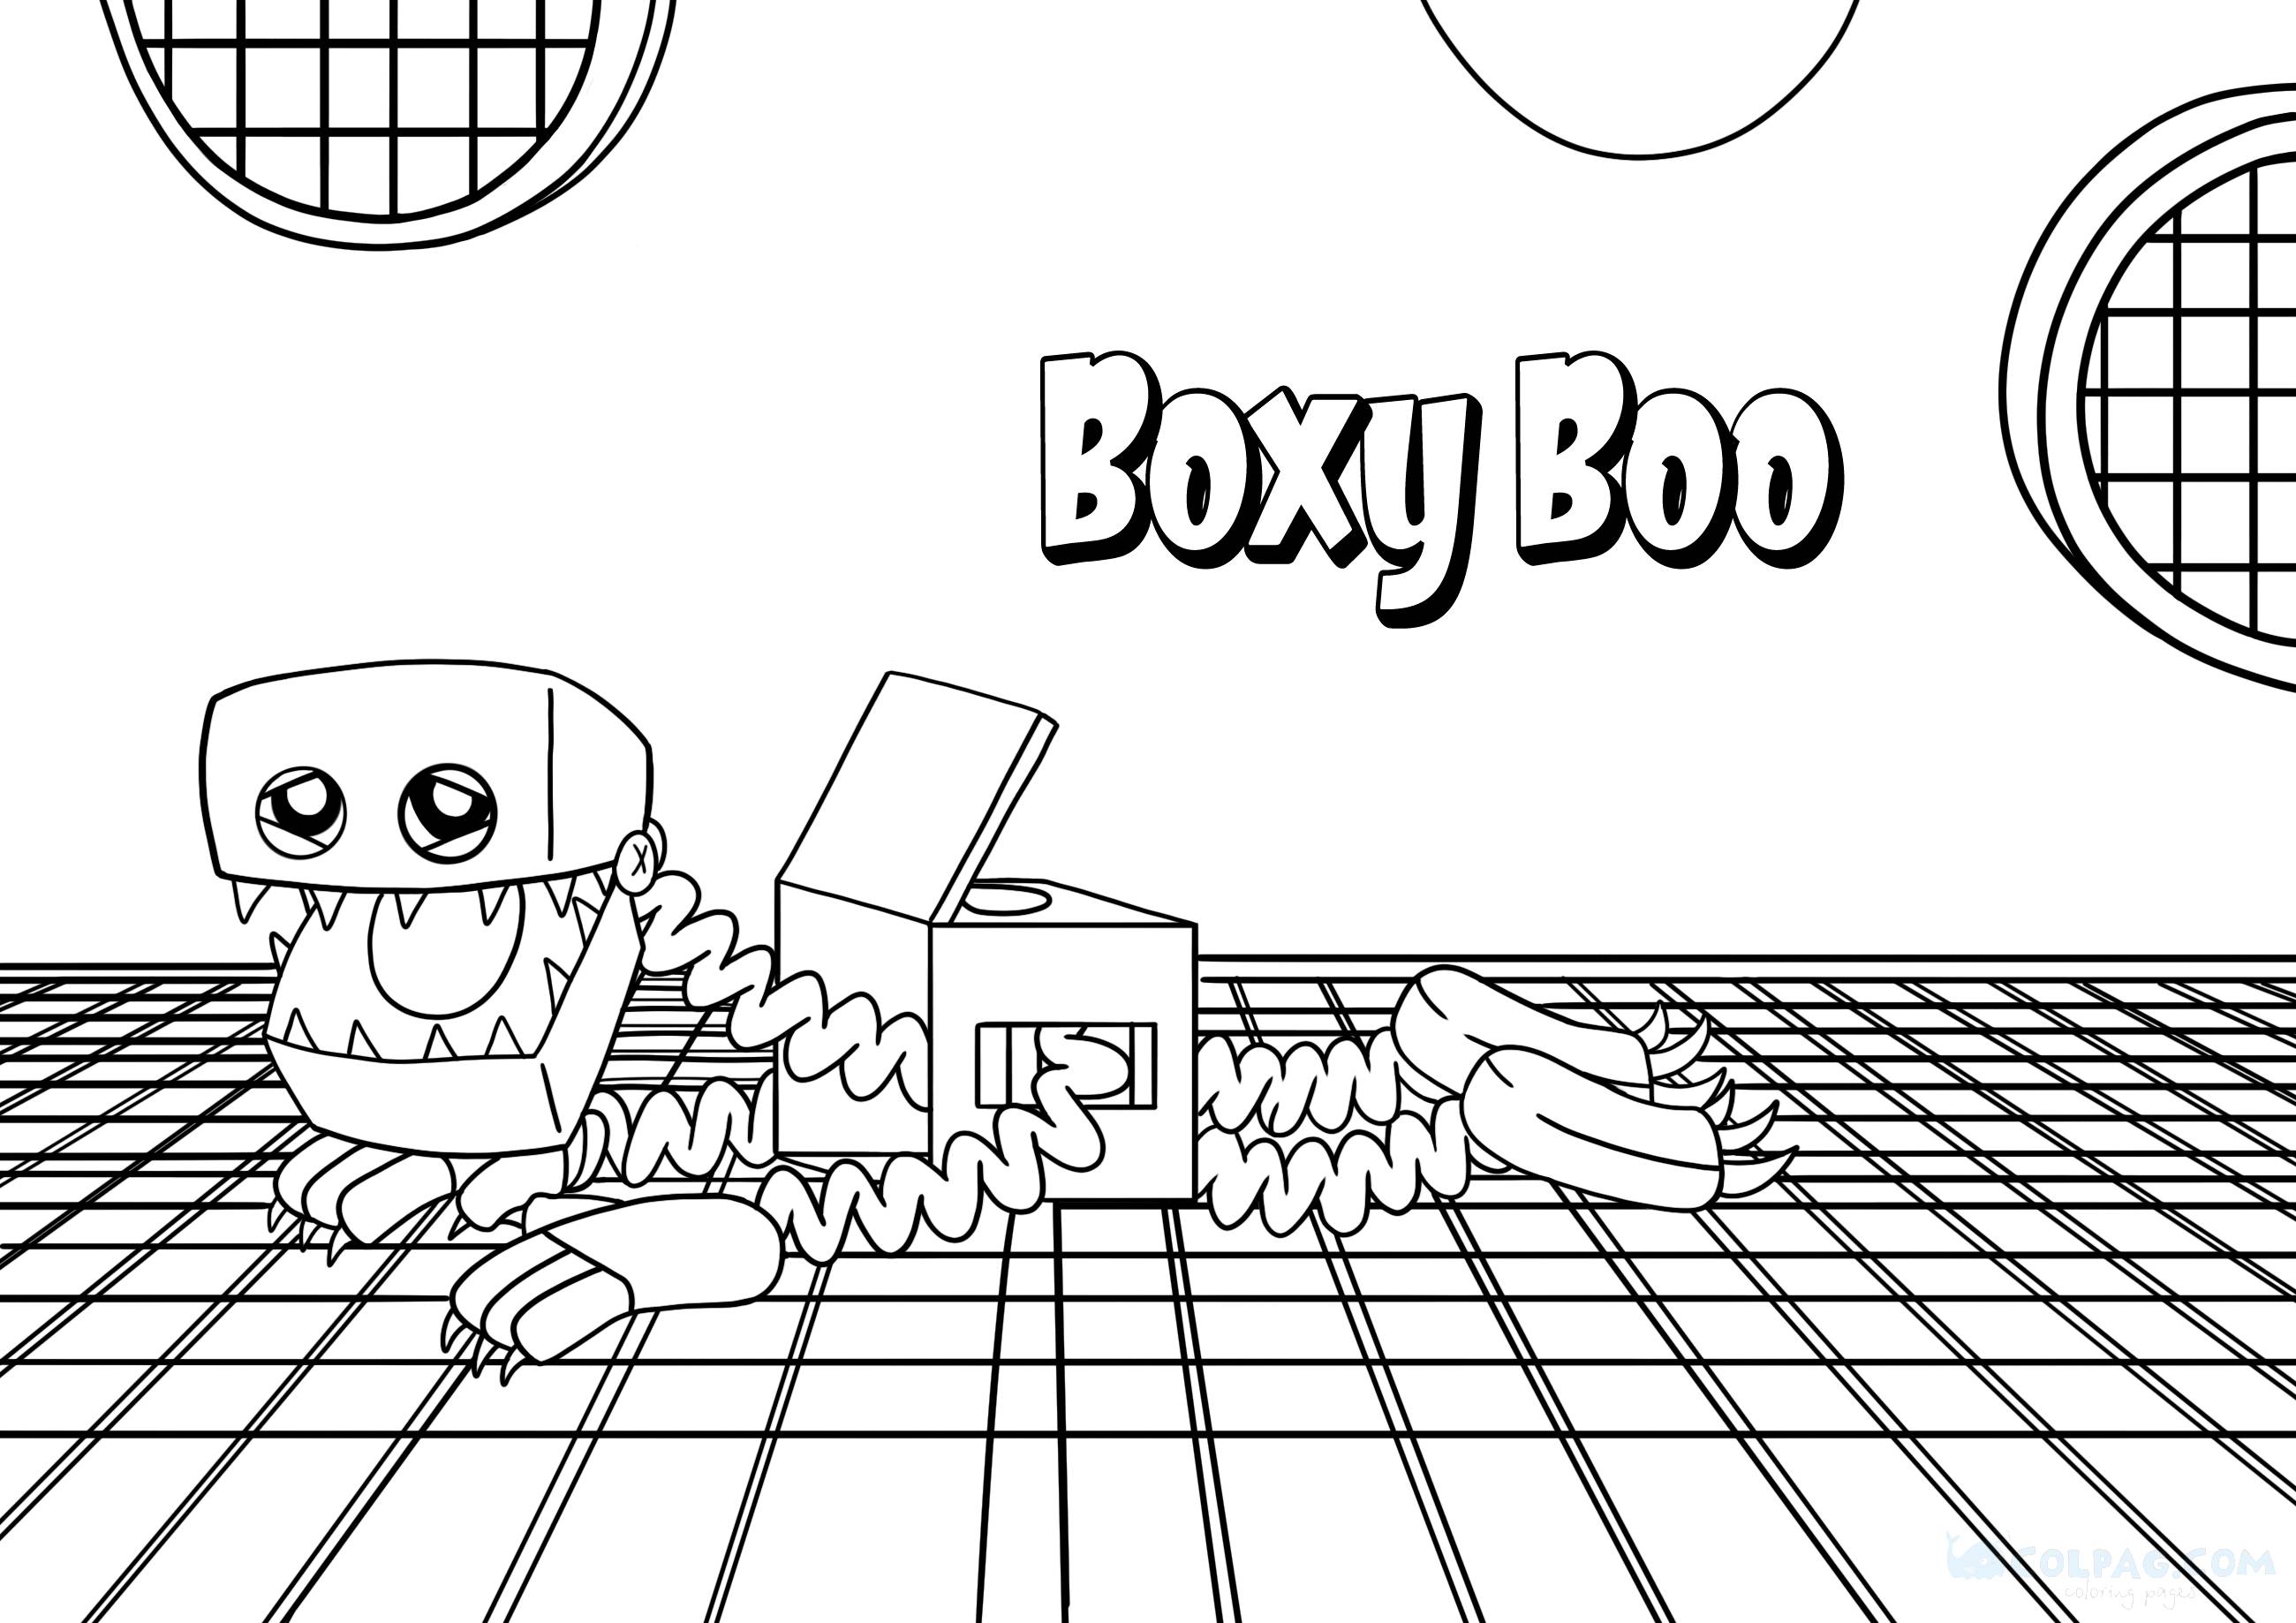 Boxy Boo ぬりえ (プロジェクト: Playtime)